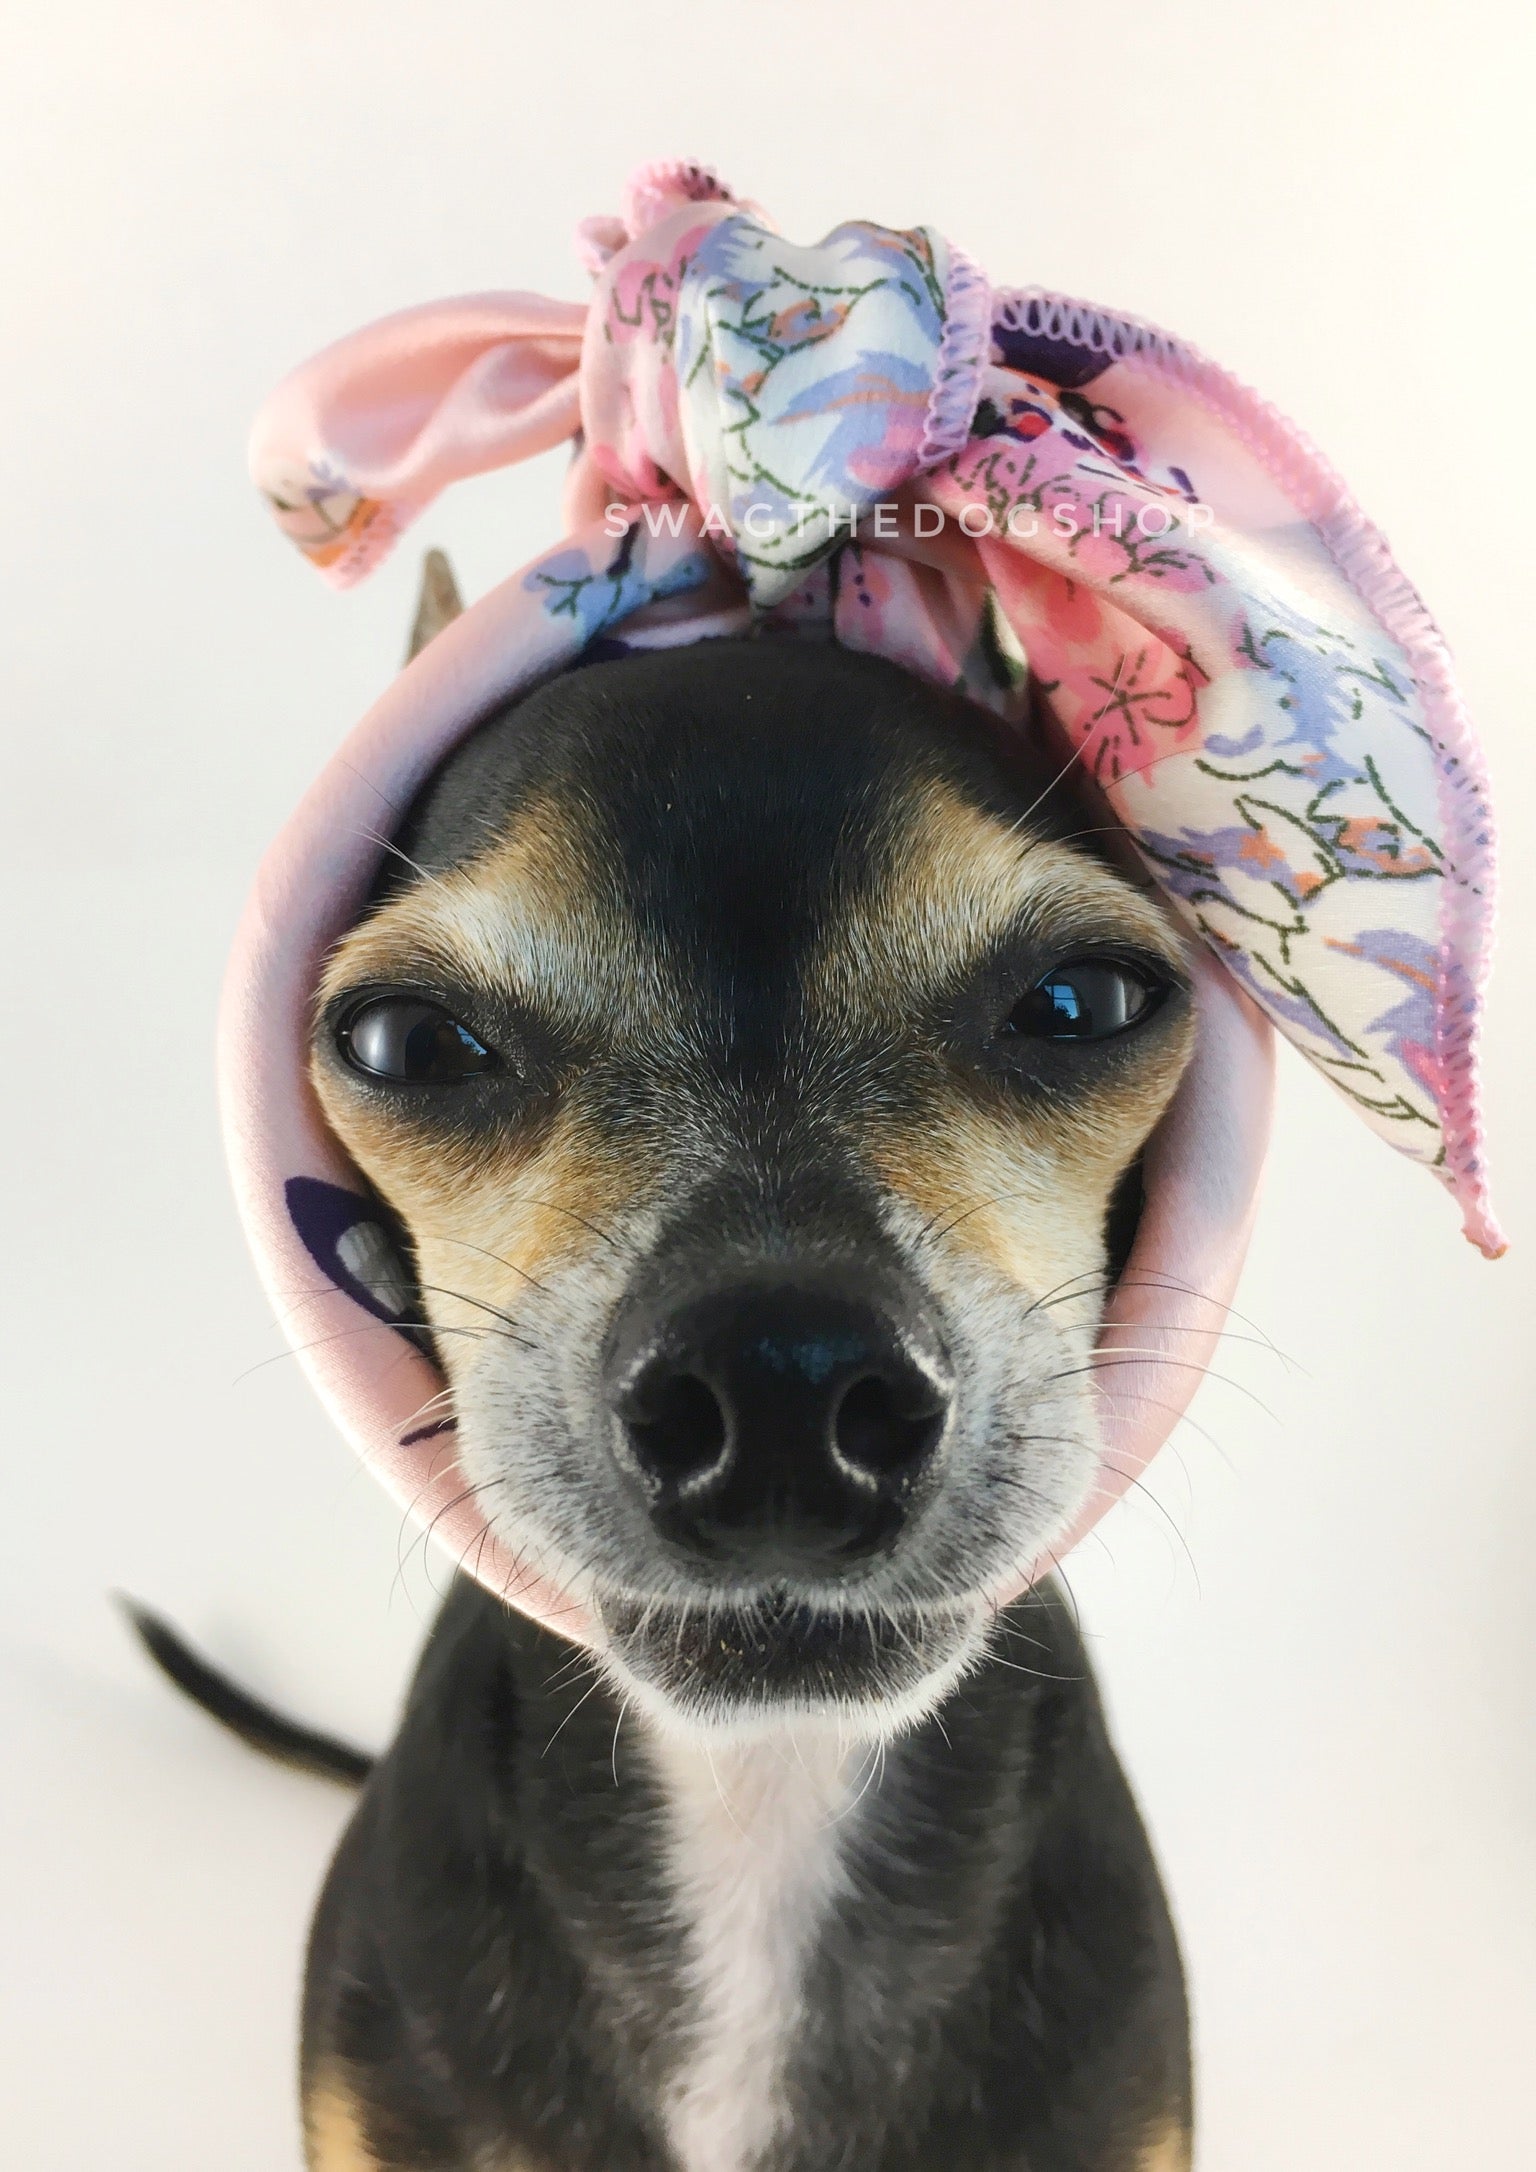 Pink Wild Flower Swagdana Scarf - Bust of Cute Chihuahua Wearing Swagdana Scarf as Headband. Dog Bandana. Dog Scarf.